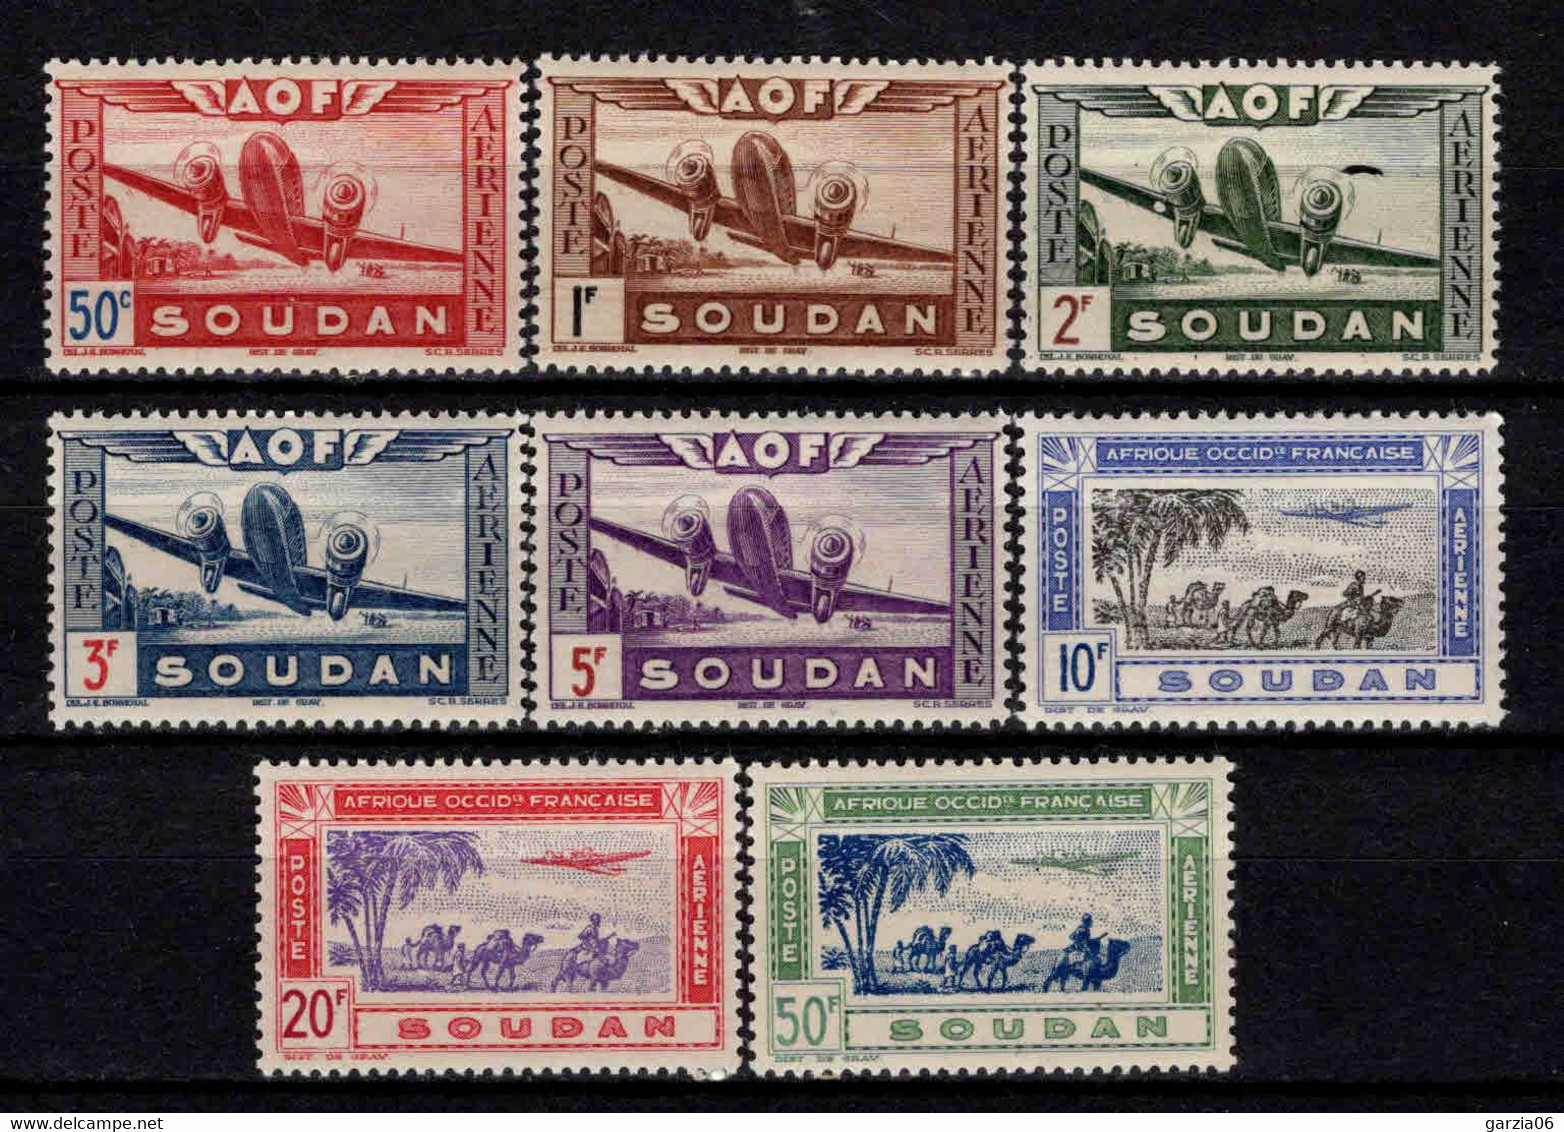 Soudan - 1942  - Avion En Vol - PA 10 à 17  - Neuf ** - MNH - Ungebraucht